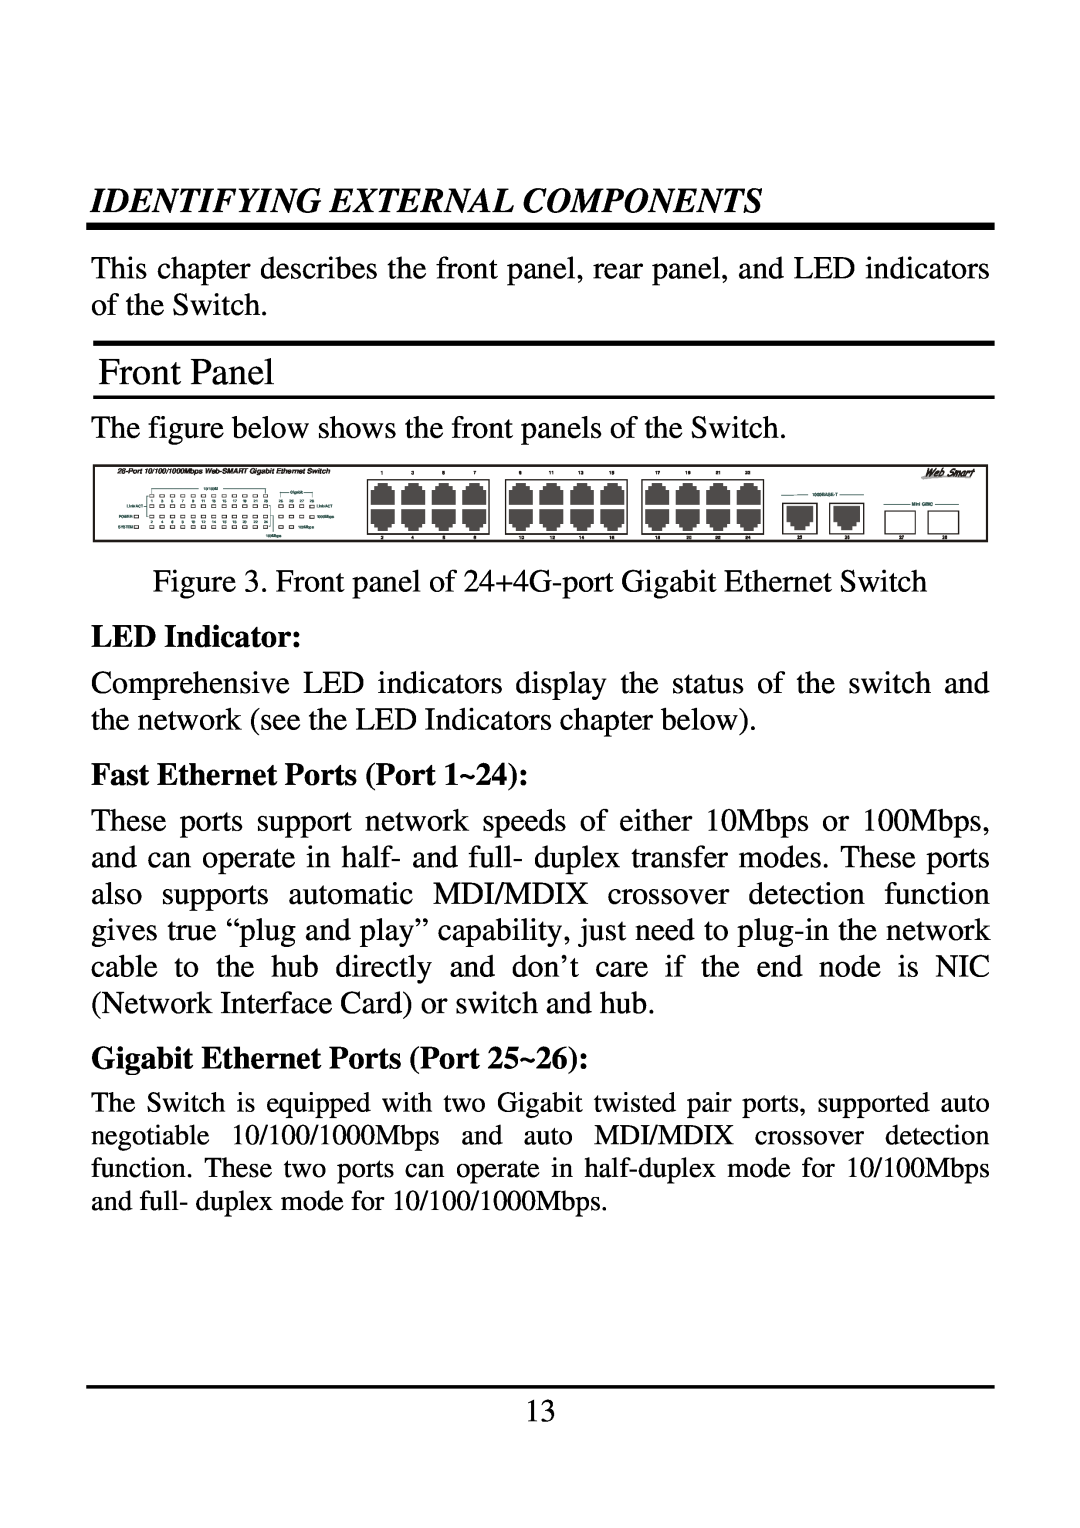 TRENDnet 21000BASE-T manual Front Panel, Identifying External Components, LED Indicator, Fast Ethernet Ports Port 1~24 